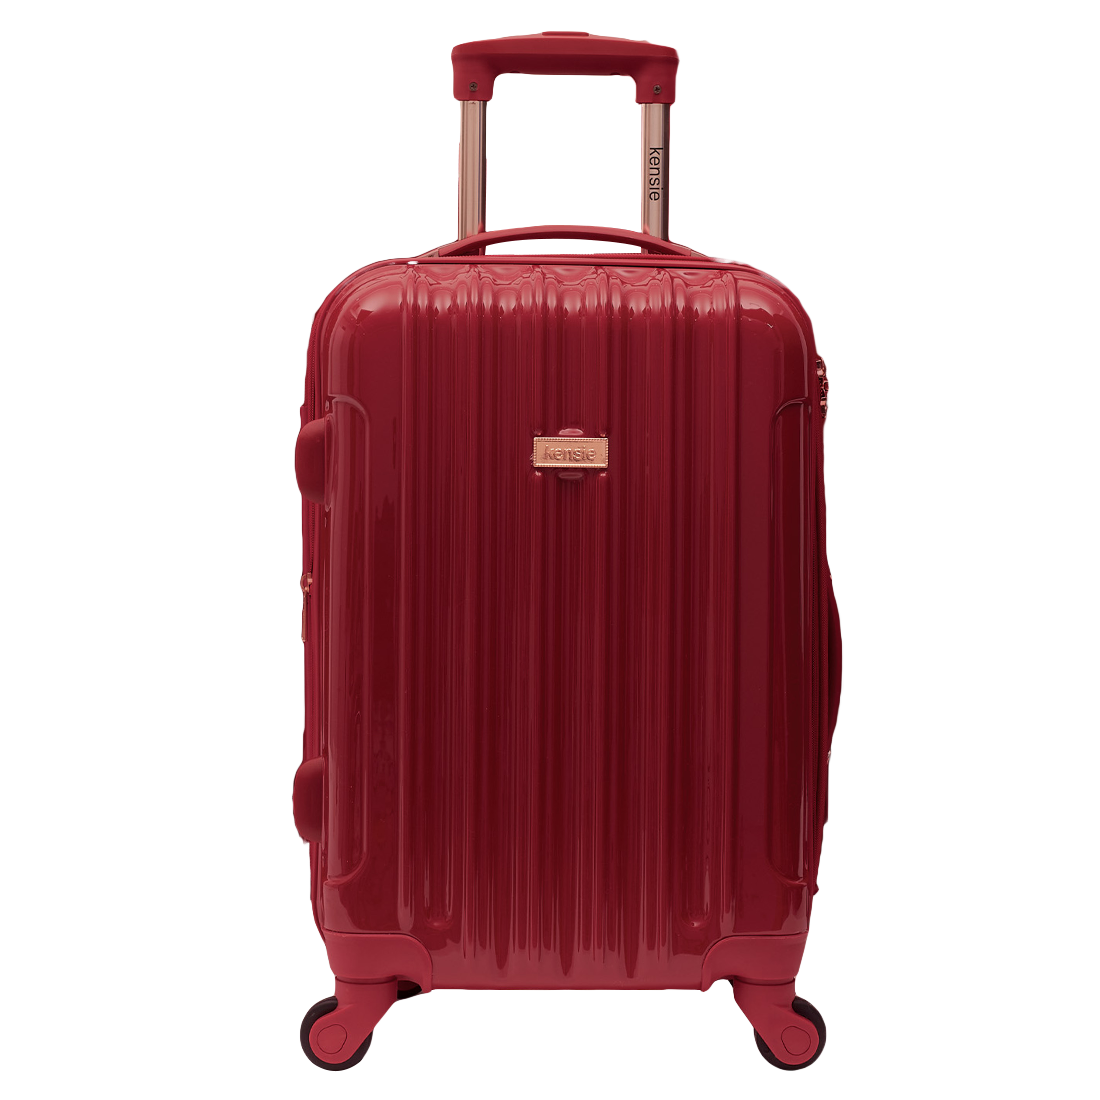 travel club duffel bag